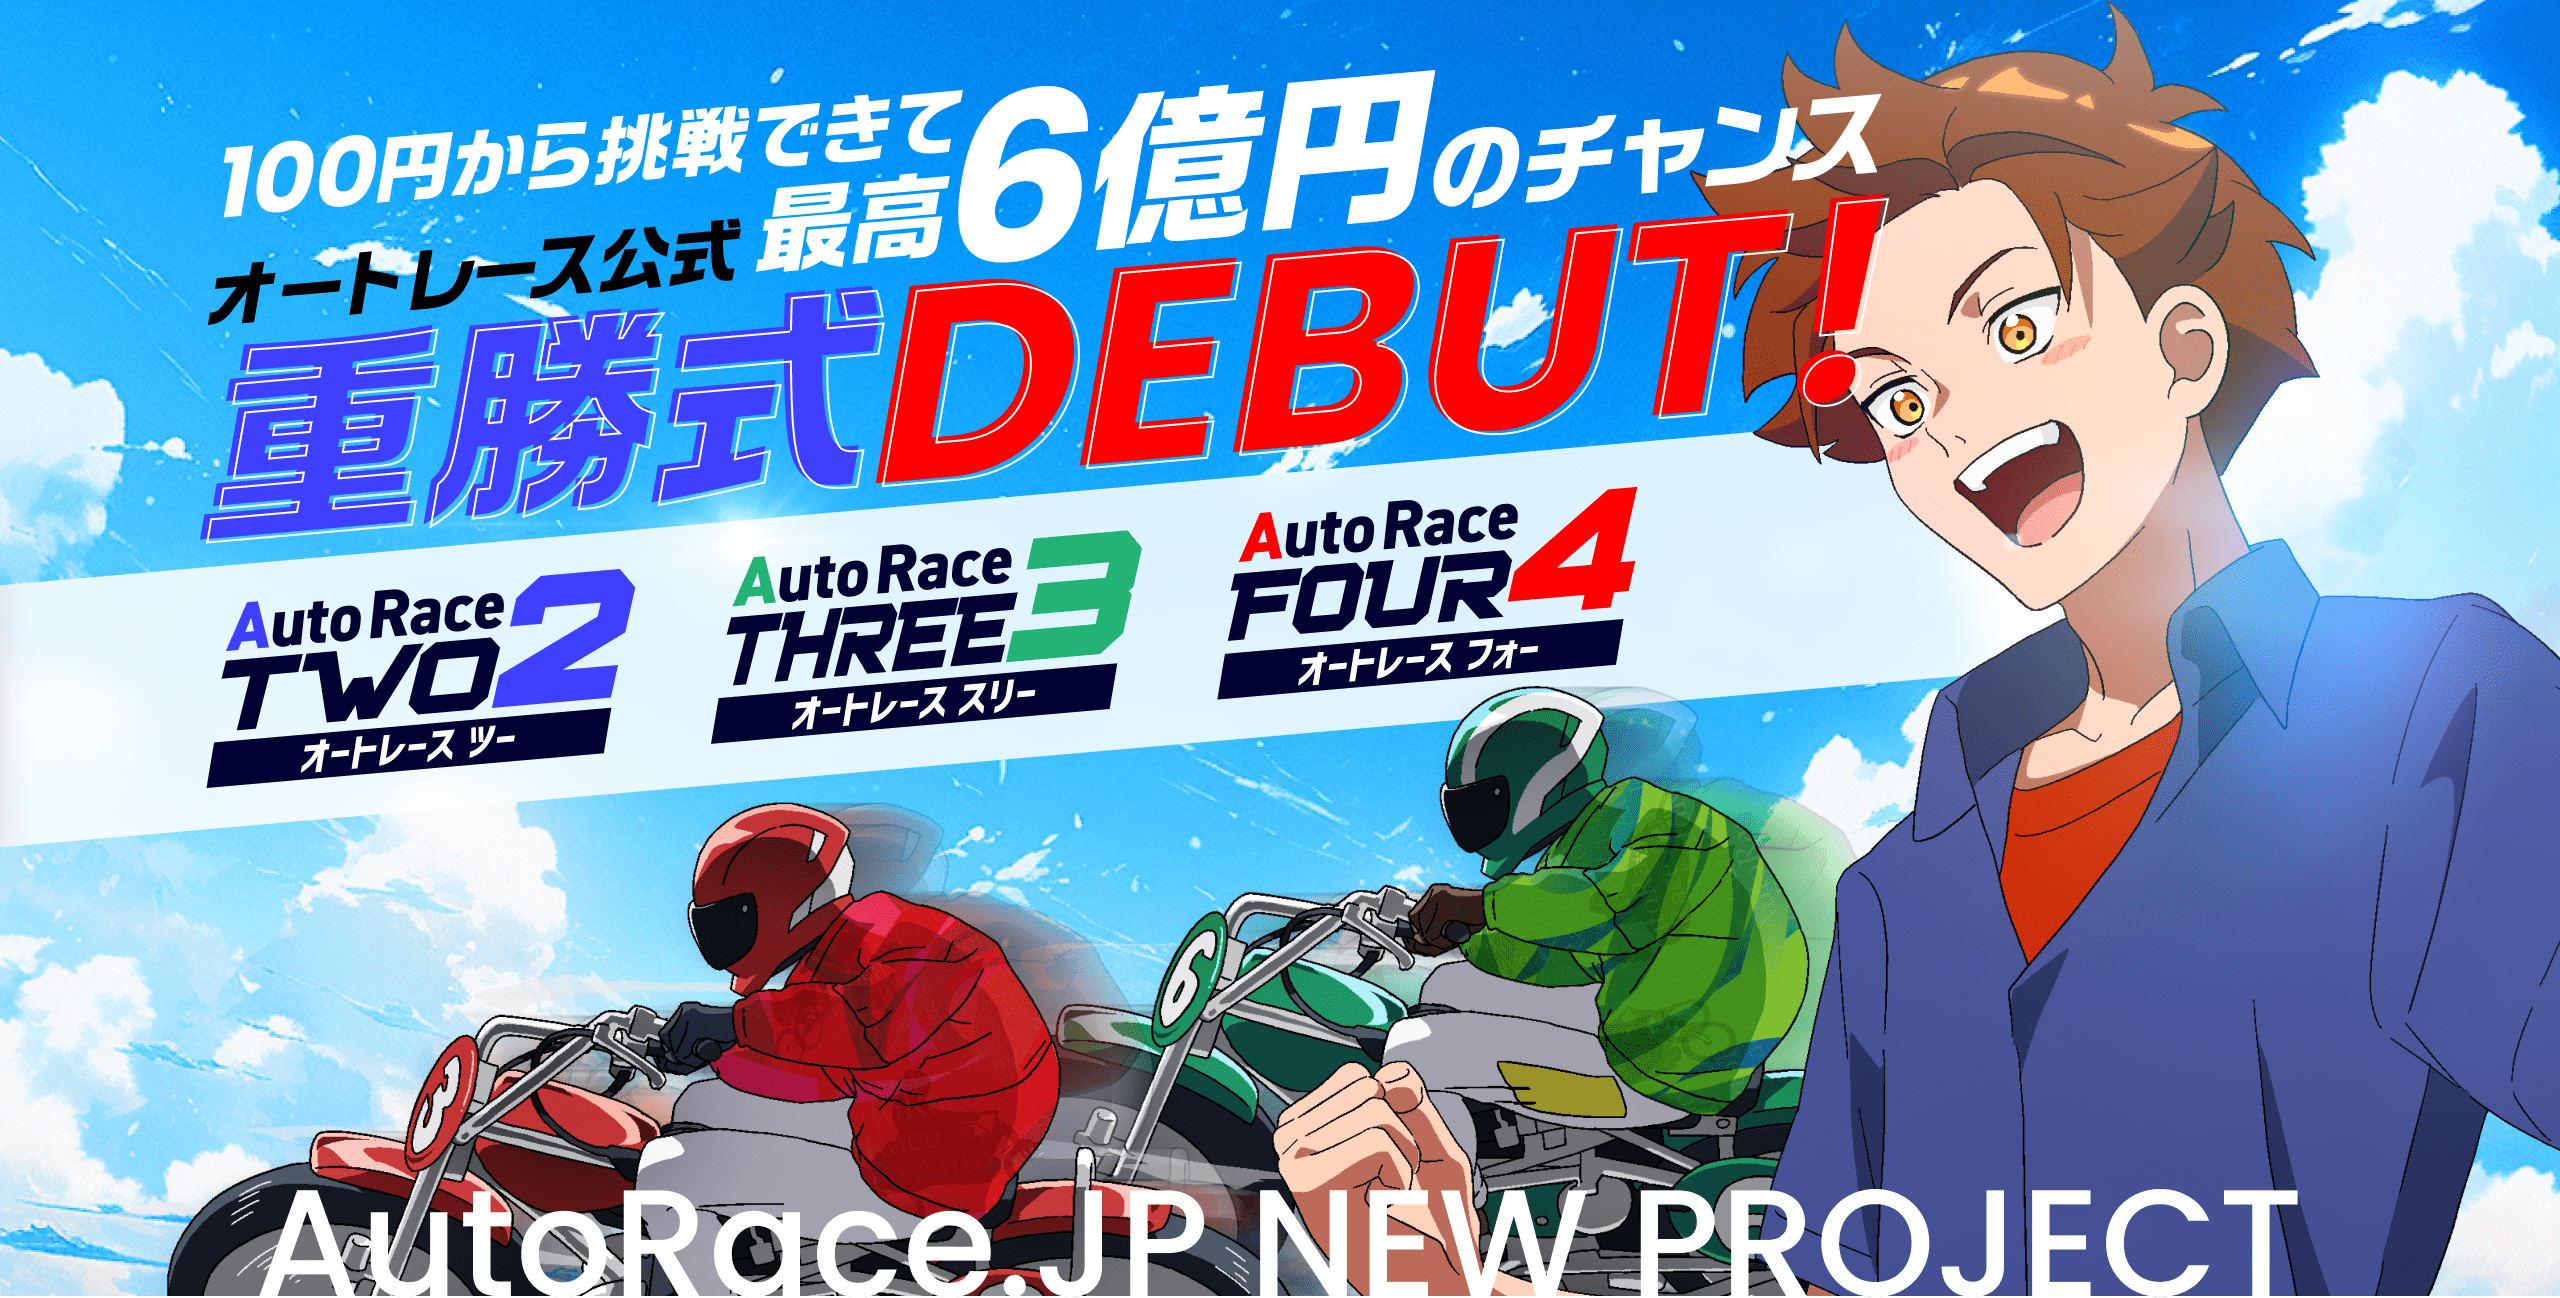 AutoRace.JP 100円から挑戦できて最高6億円のチャンス オートレース公式 重勝式DEBUT！